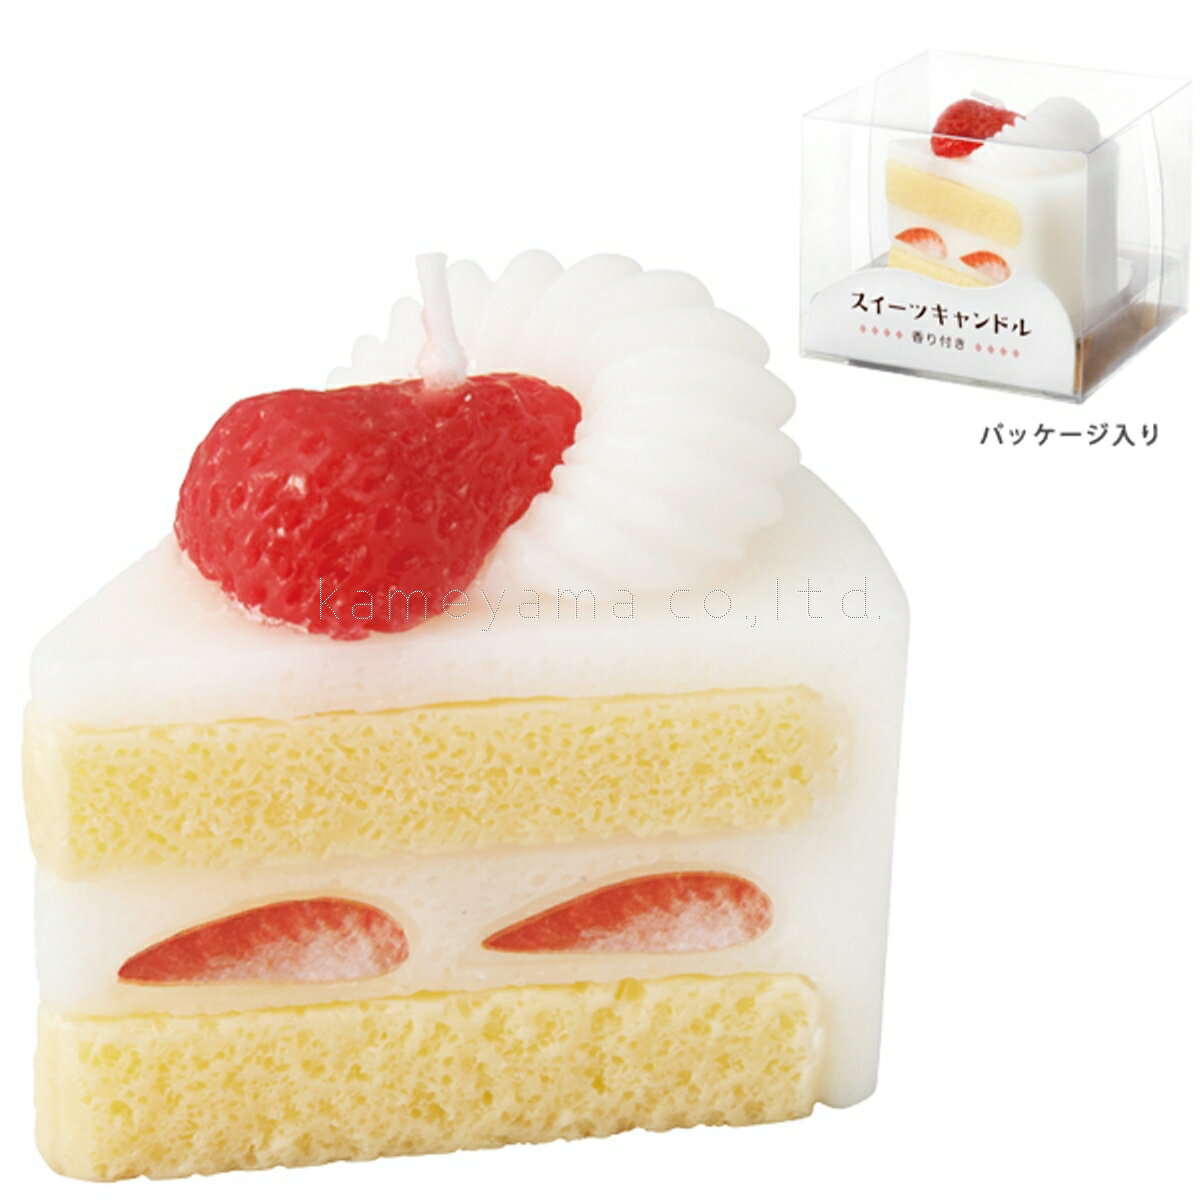 kameyama candle カメヤマ パーティーキャンドル スイーツキャンドル ショートケーキ